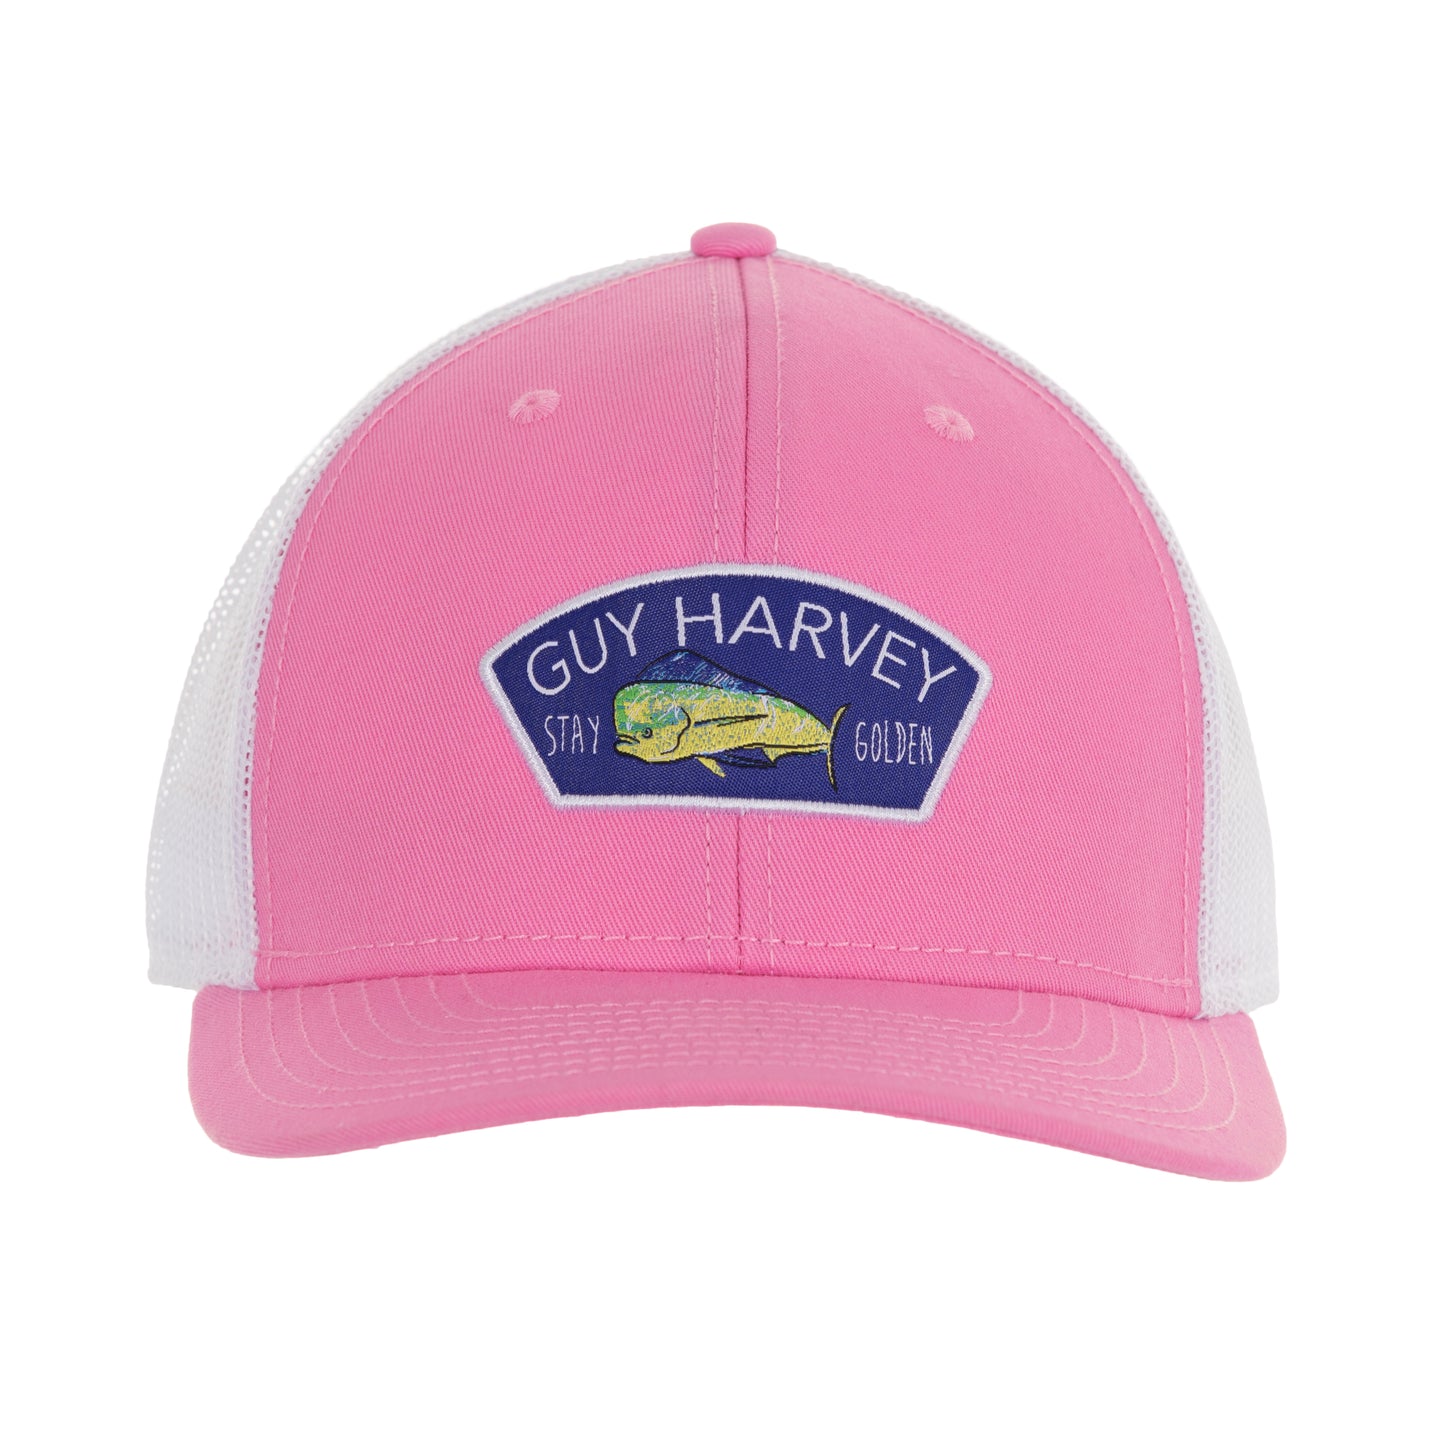 Ladies Pink Stay Golden Mesh Trucker Hat View 3